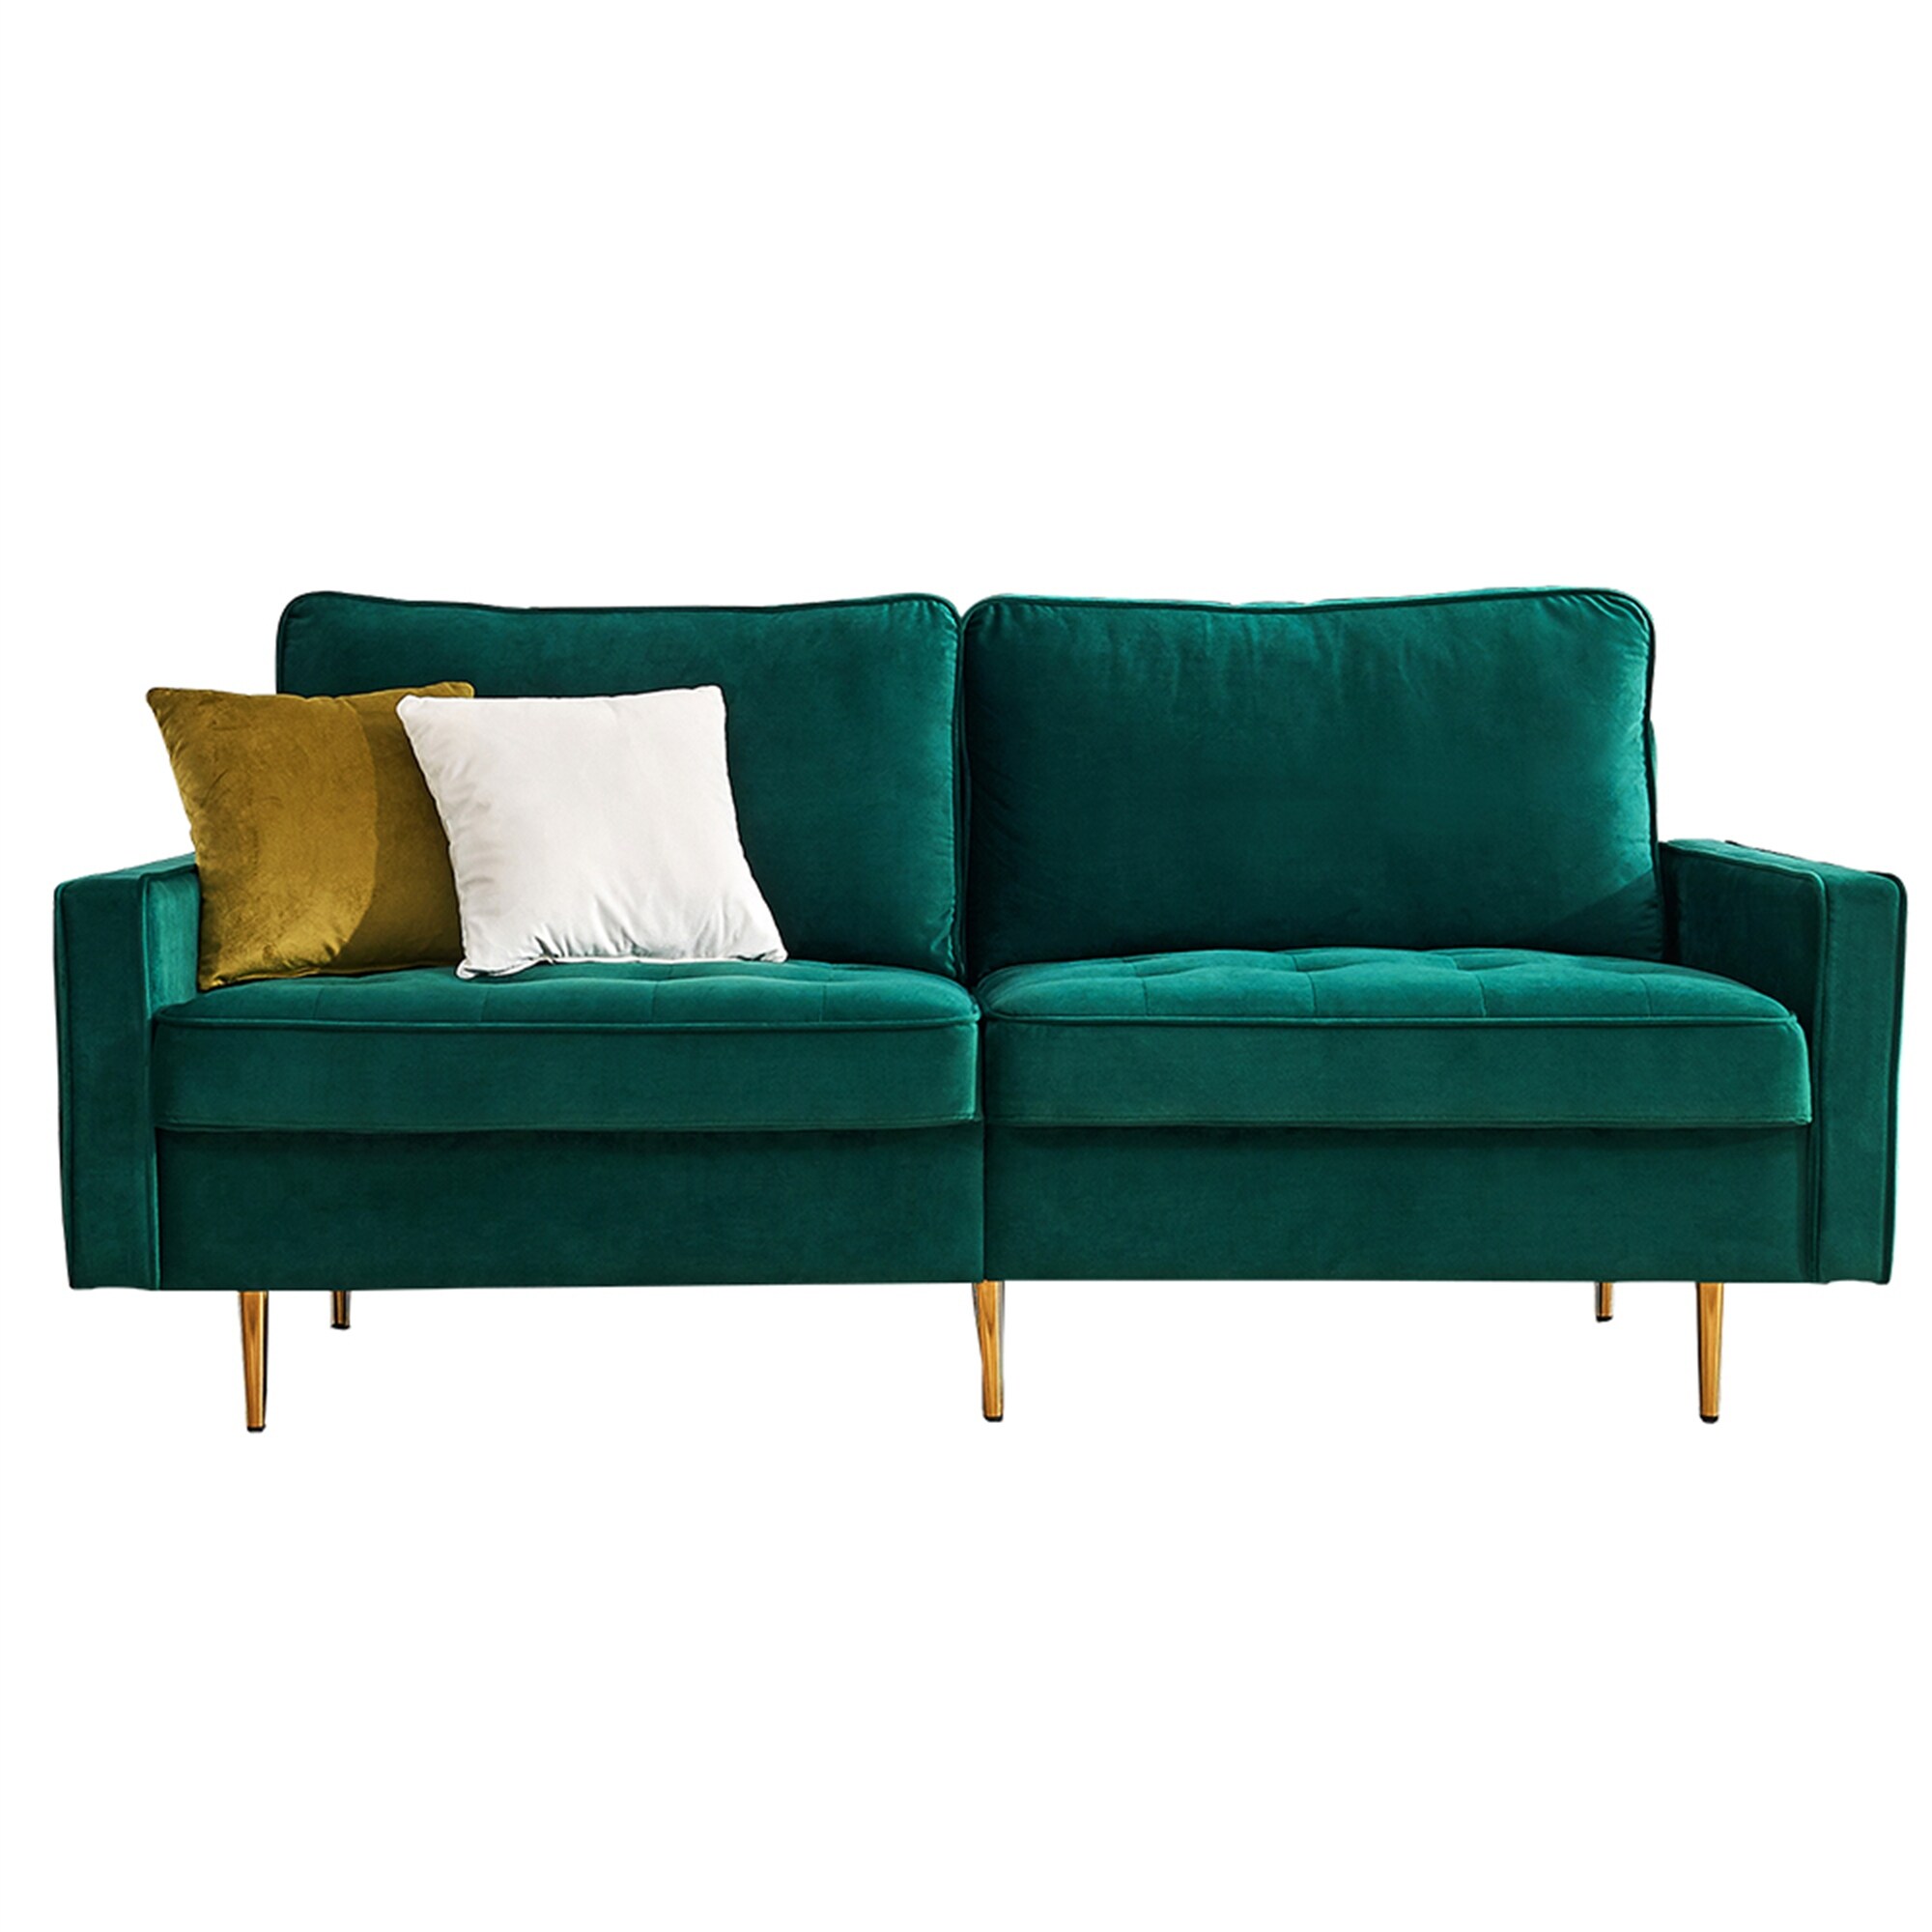 Velvet Fabric Tufted Loveseat Sofa With 2 Pillows - 70 X 31.5